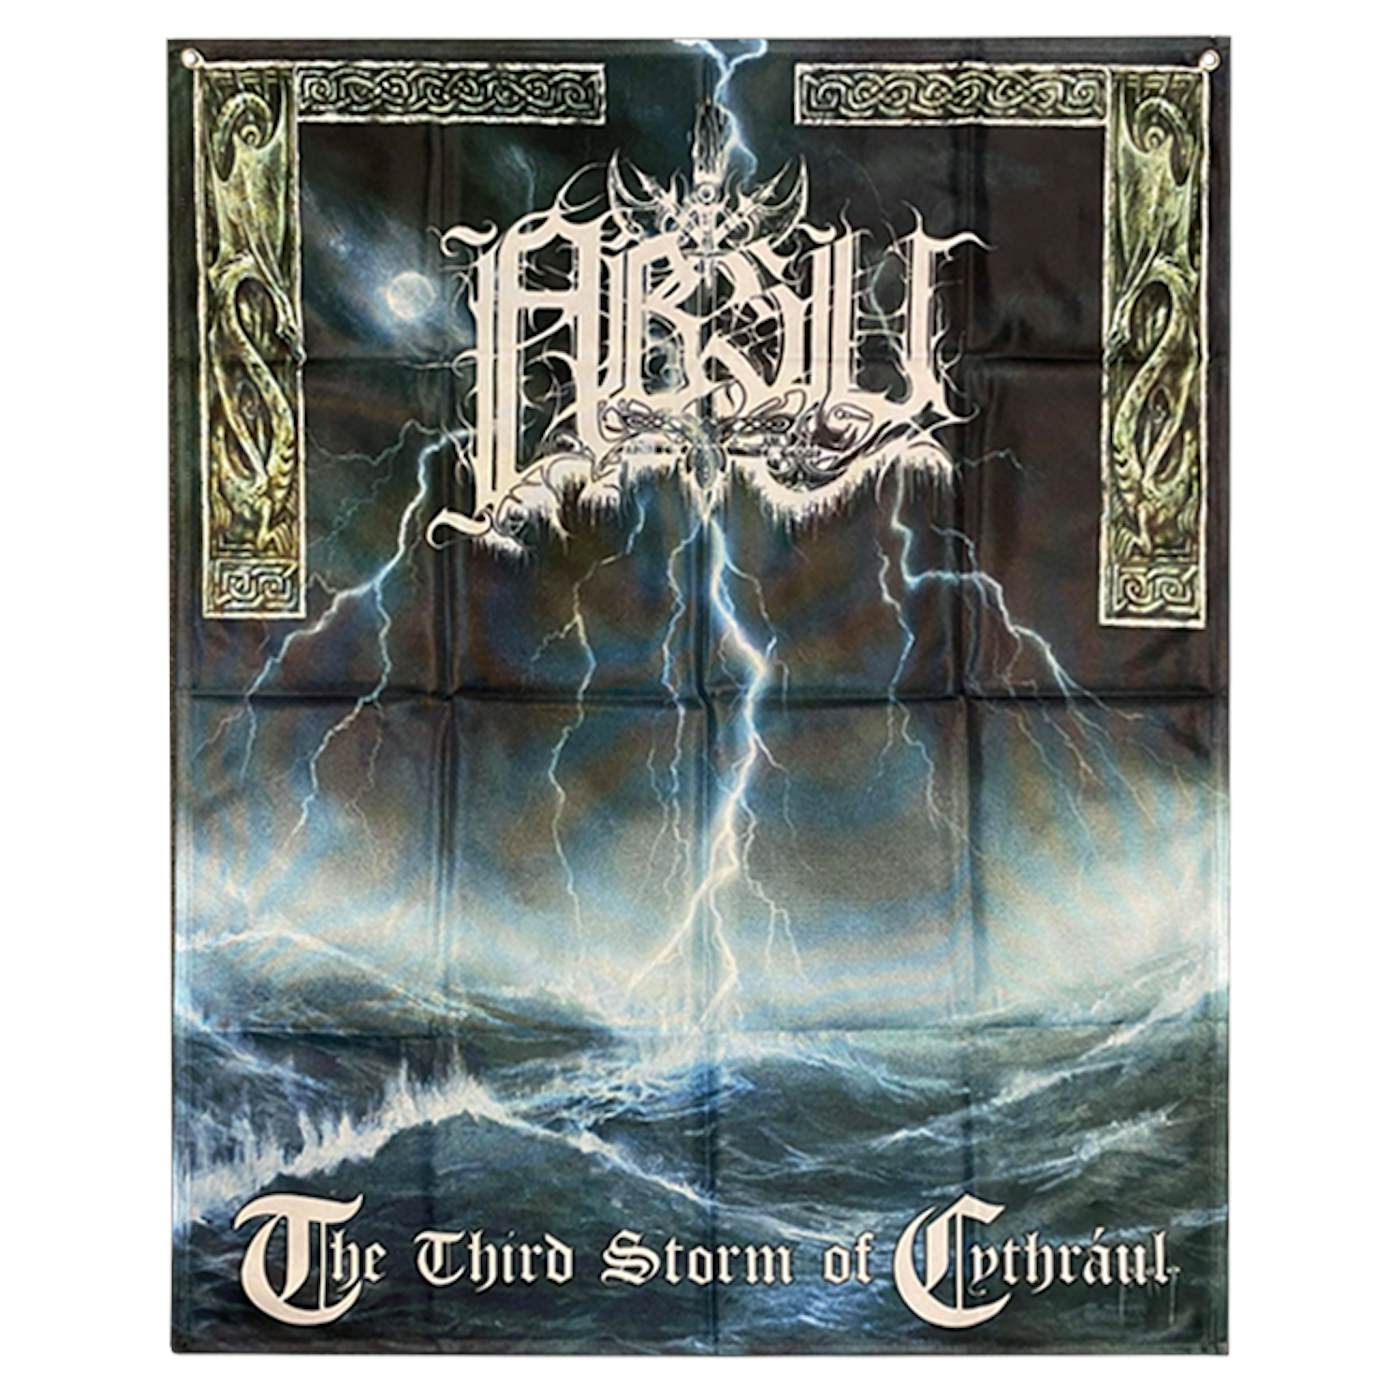 ABSU - 'The Third Storm of Cythraul' Flag